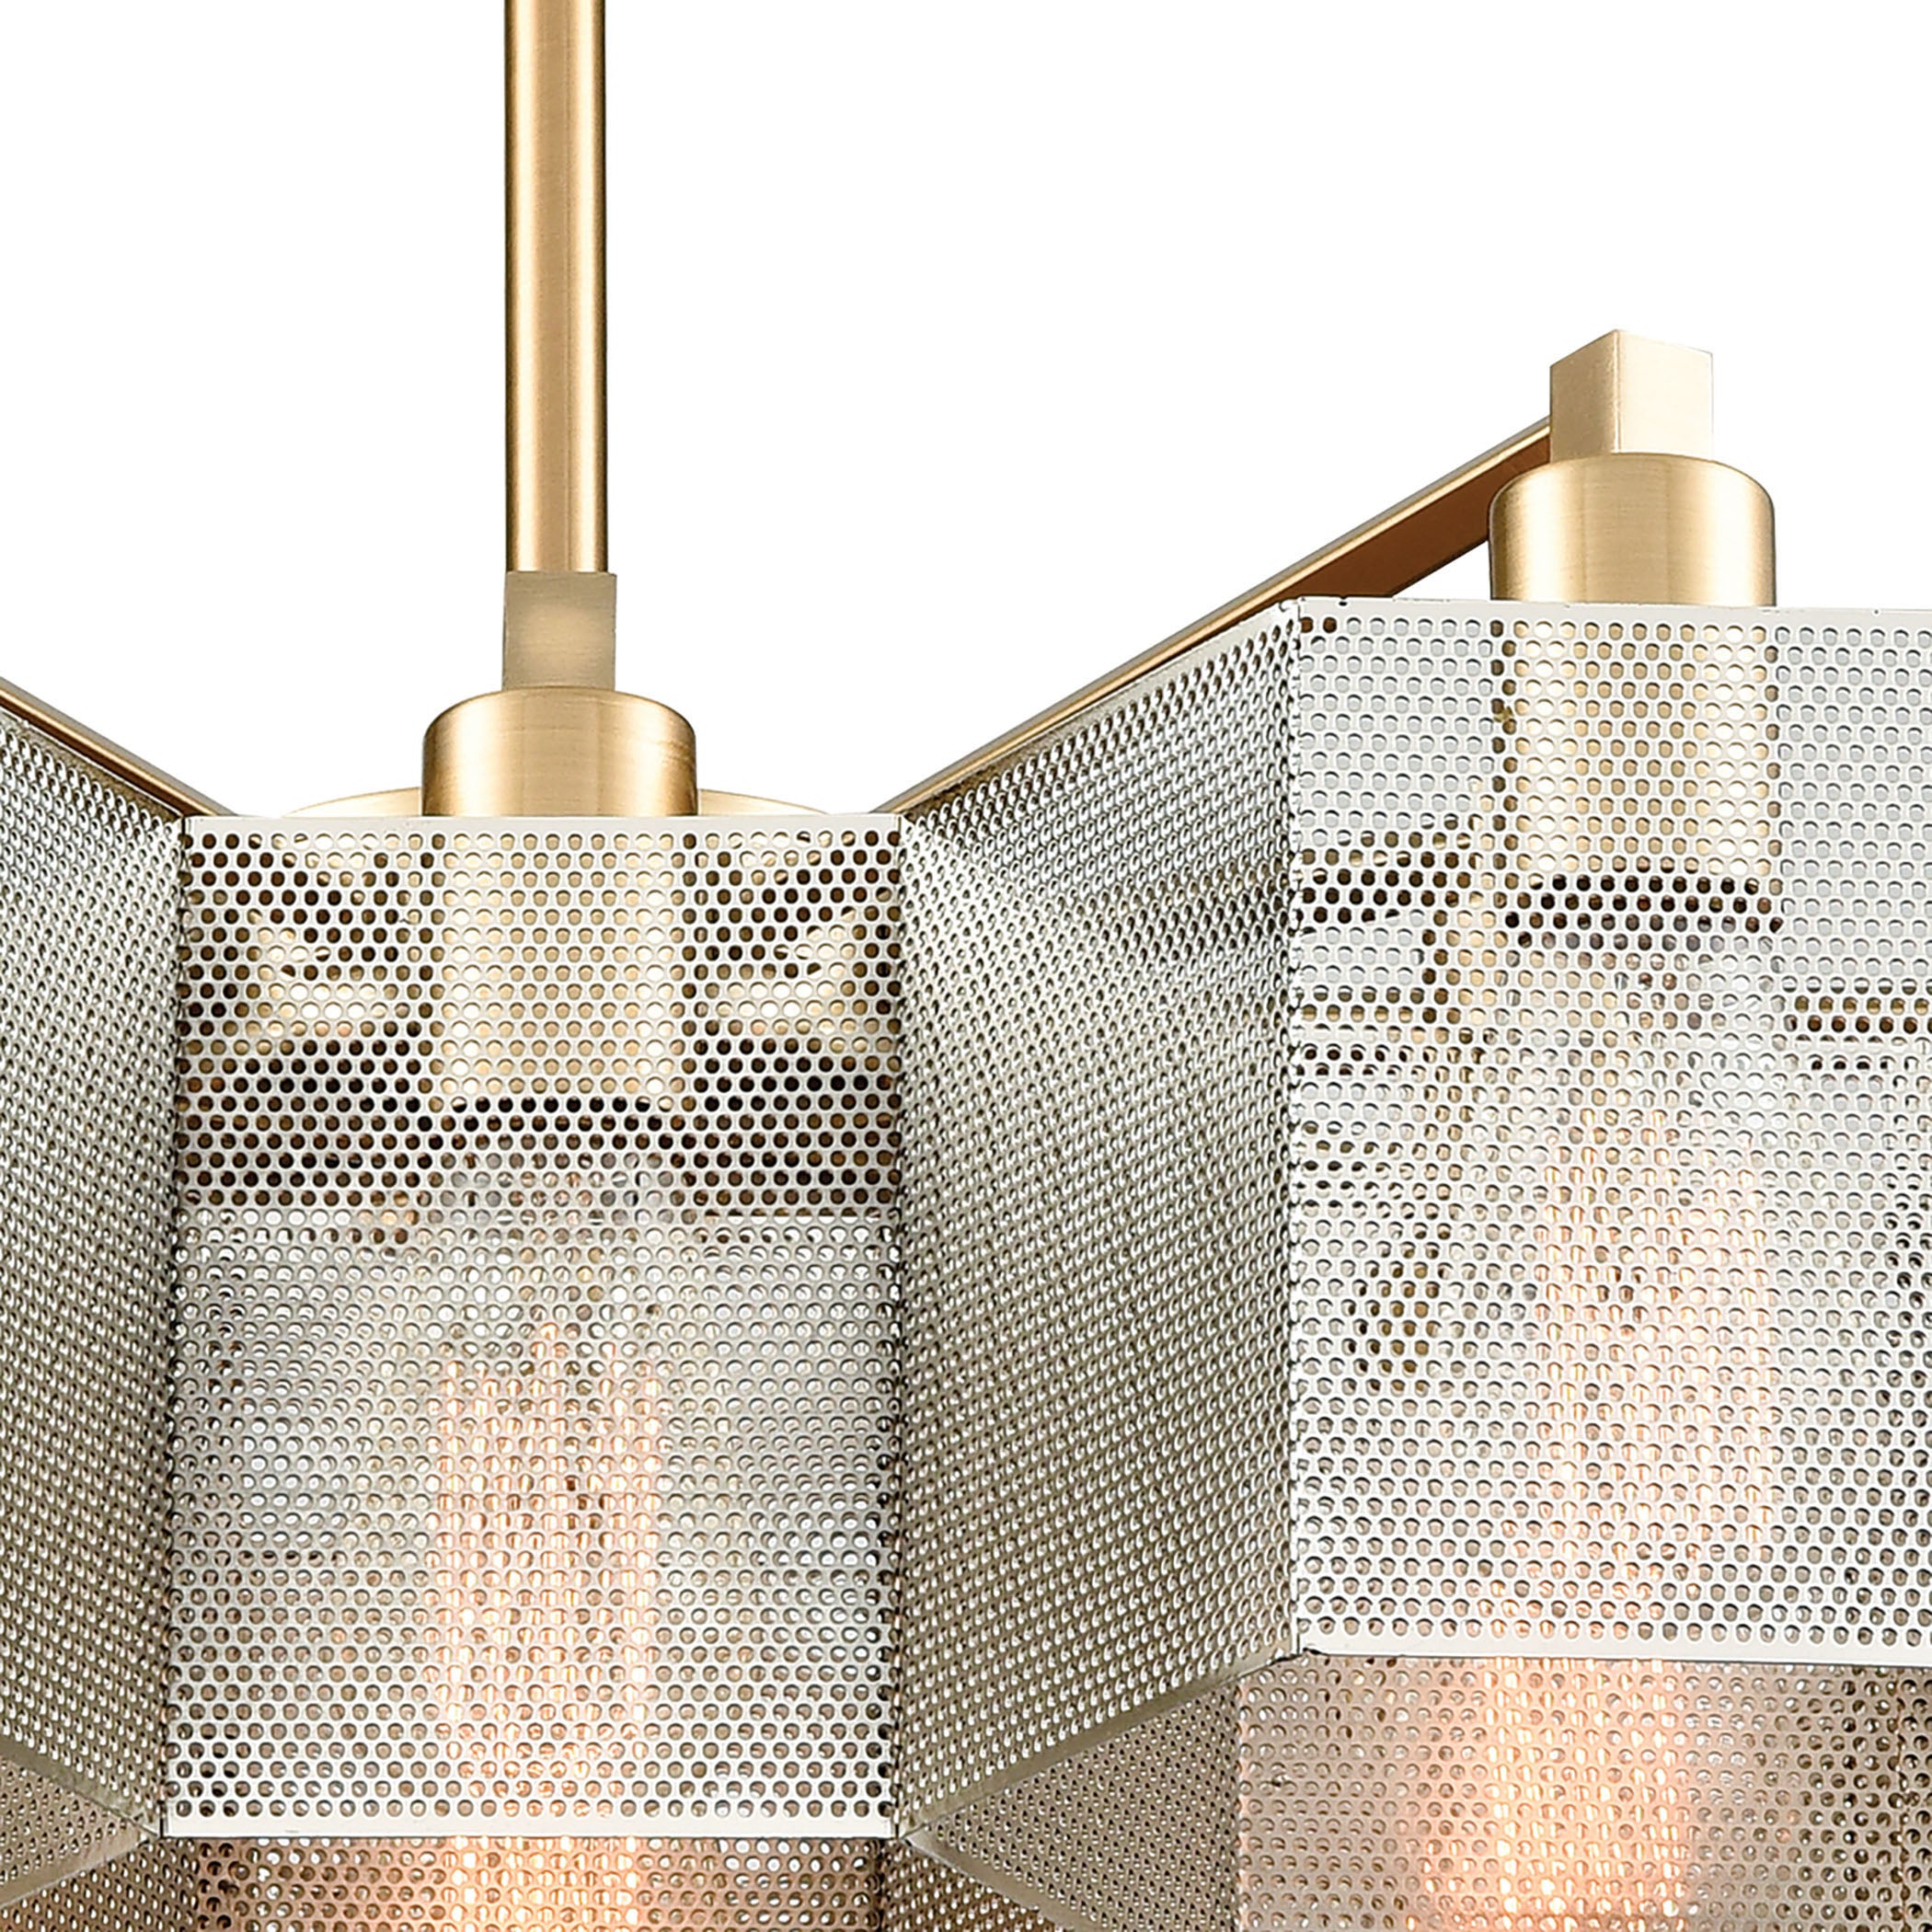 ELK Lighting 21115/13 Compartir 13-Light Chandelier in Satin Brass with Perforated Metal Shade